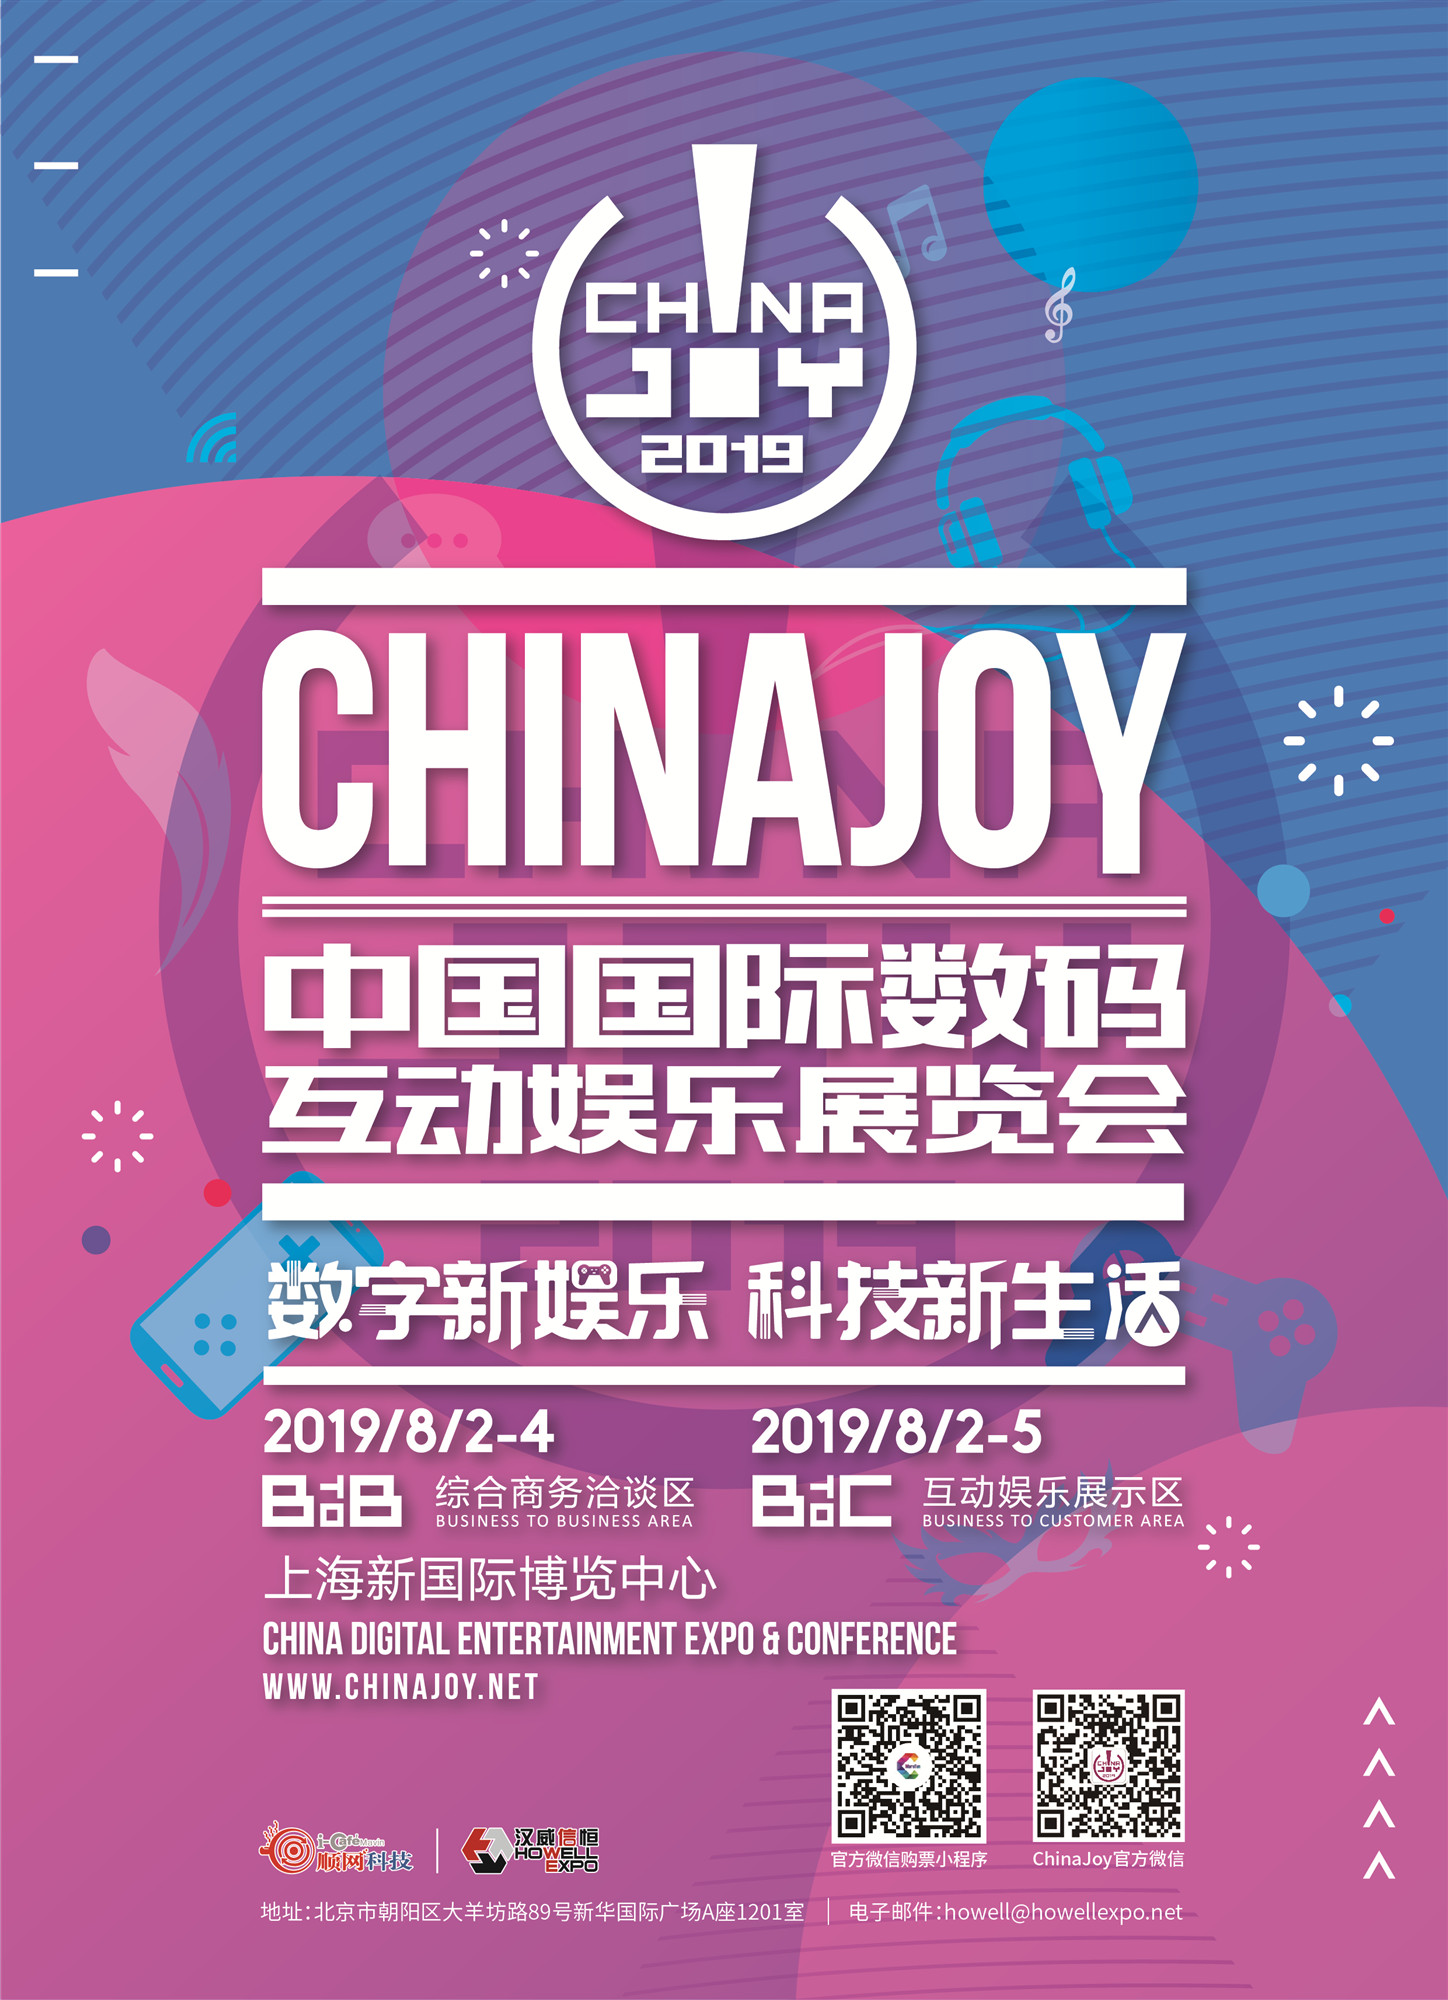 ChinaJoy官方小程序“CJ魔方”重磅推出！门票预售优惠来袭！